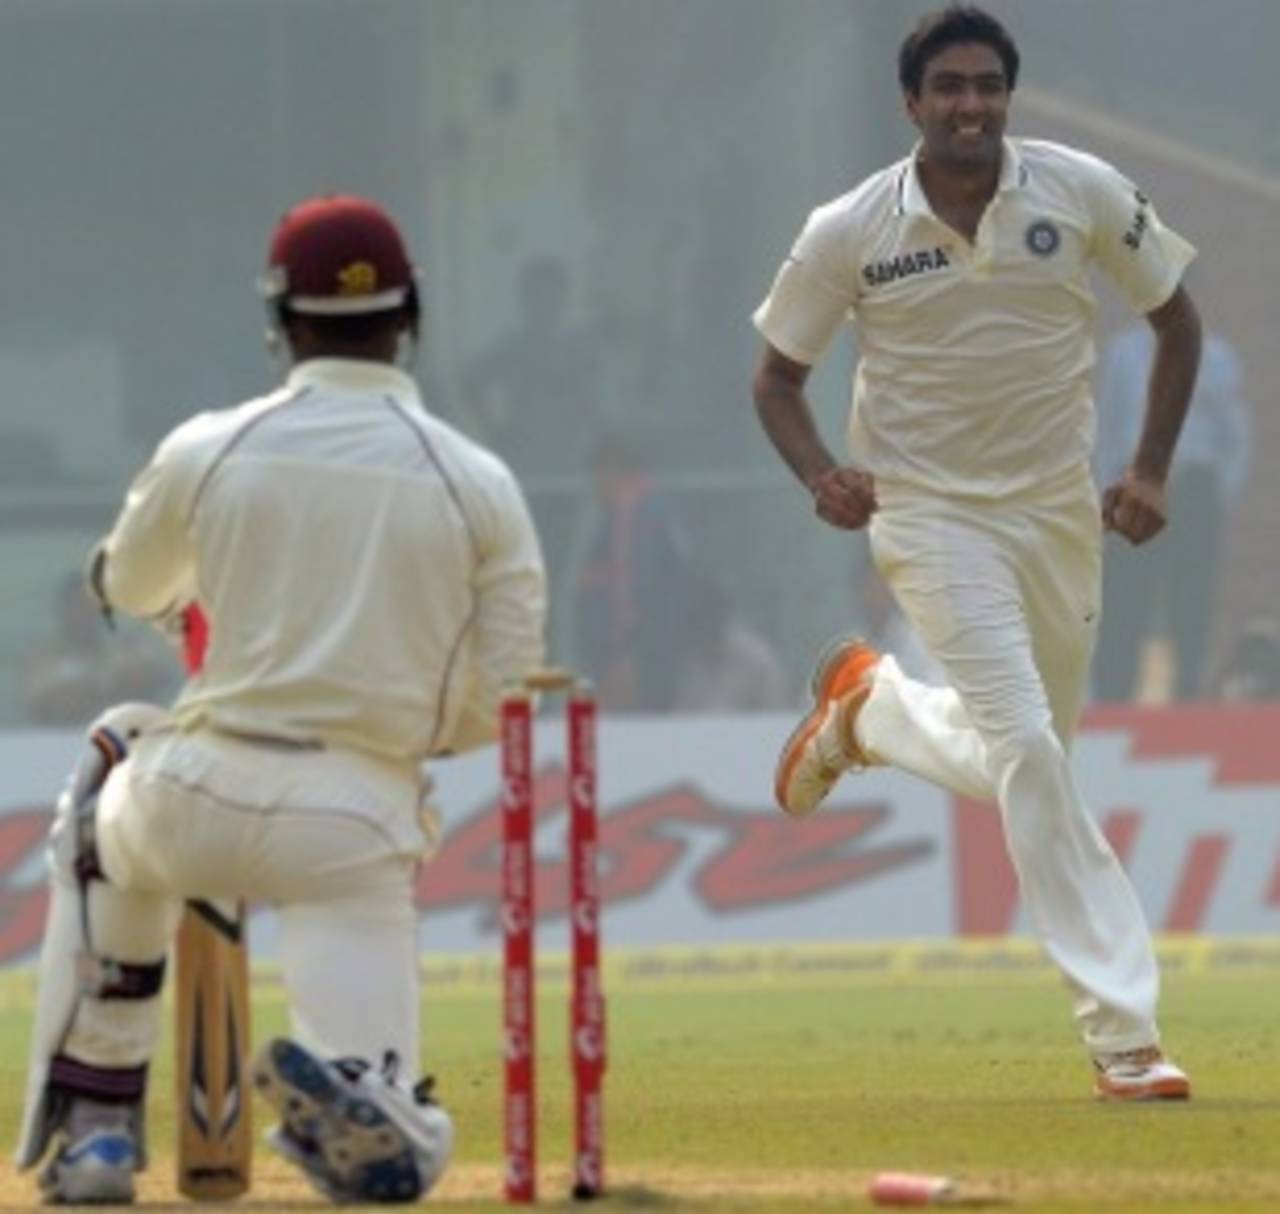 R Ashwin bowled Marlon Samuels, India v West Indies, 1st Test, New Delhi, 3rd day, November 8, 2011